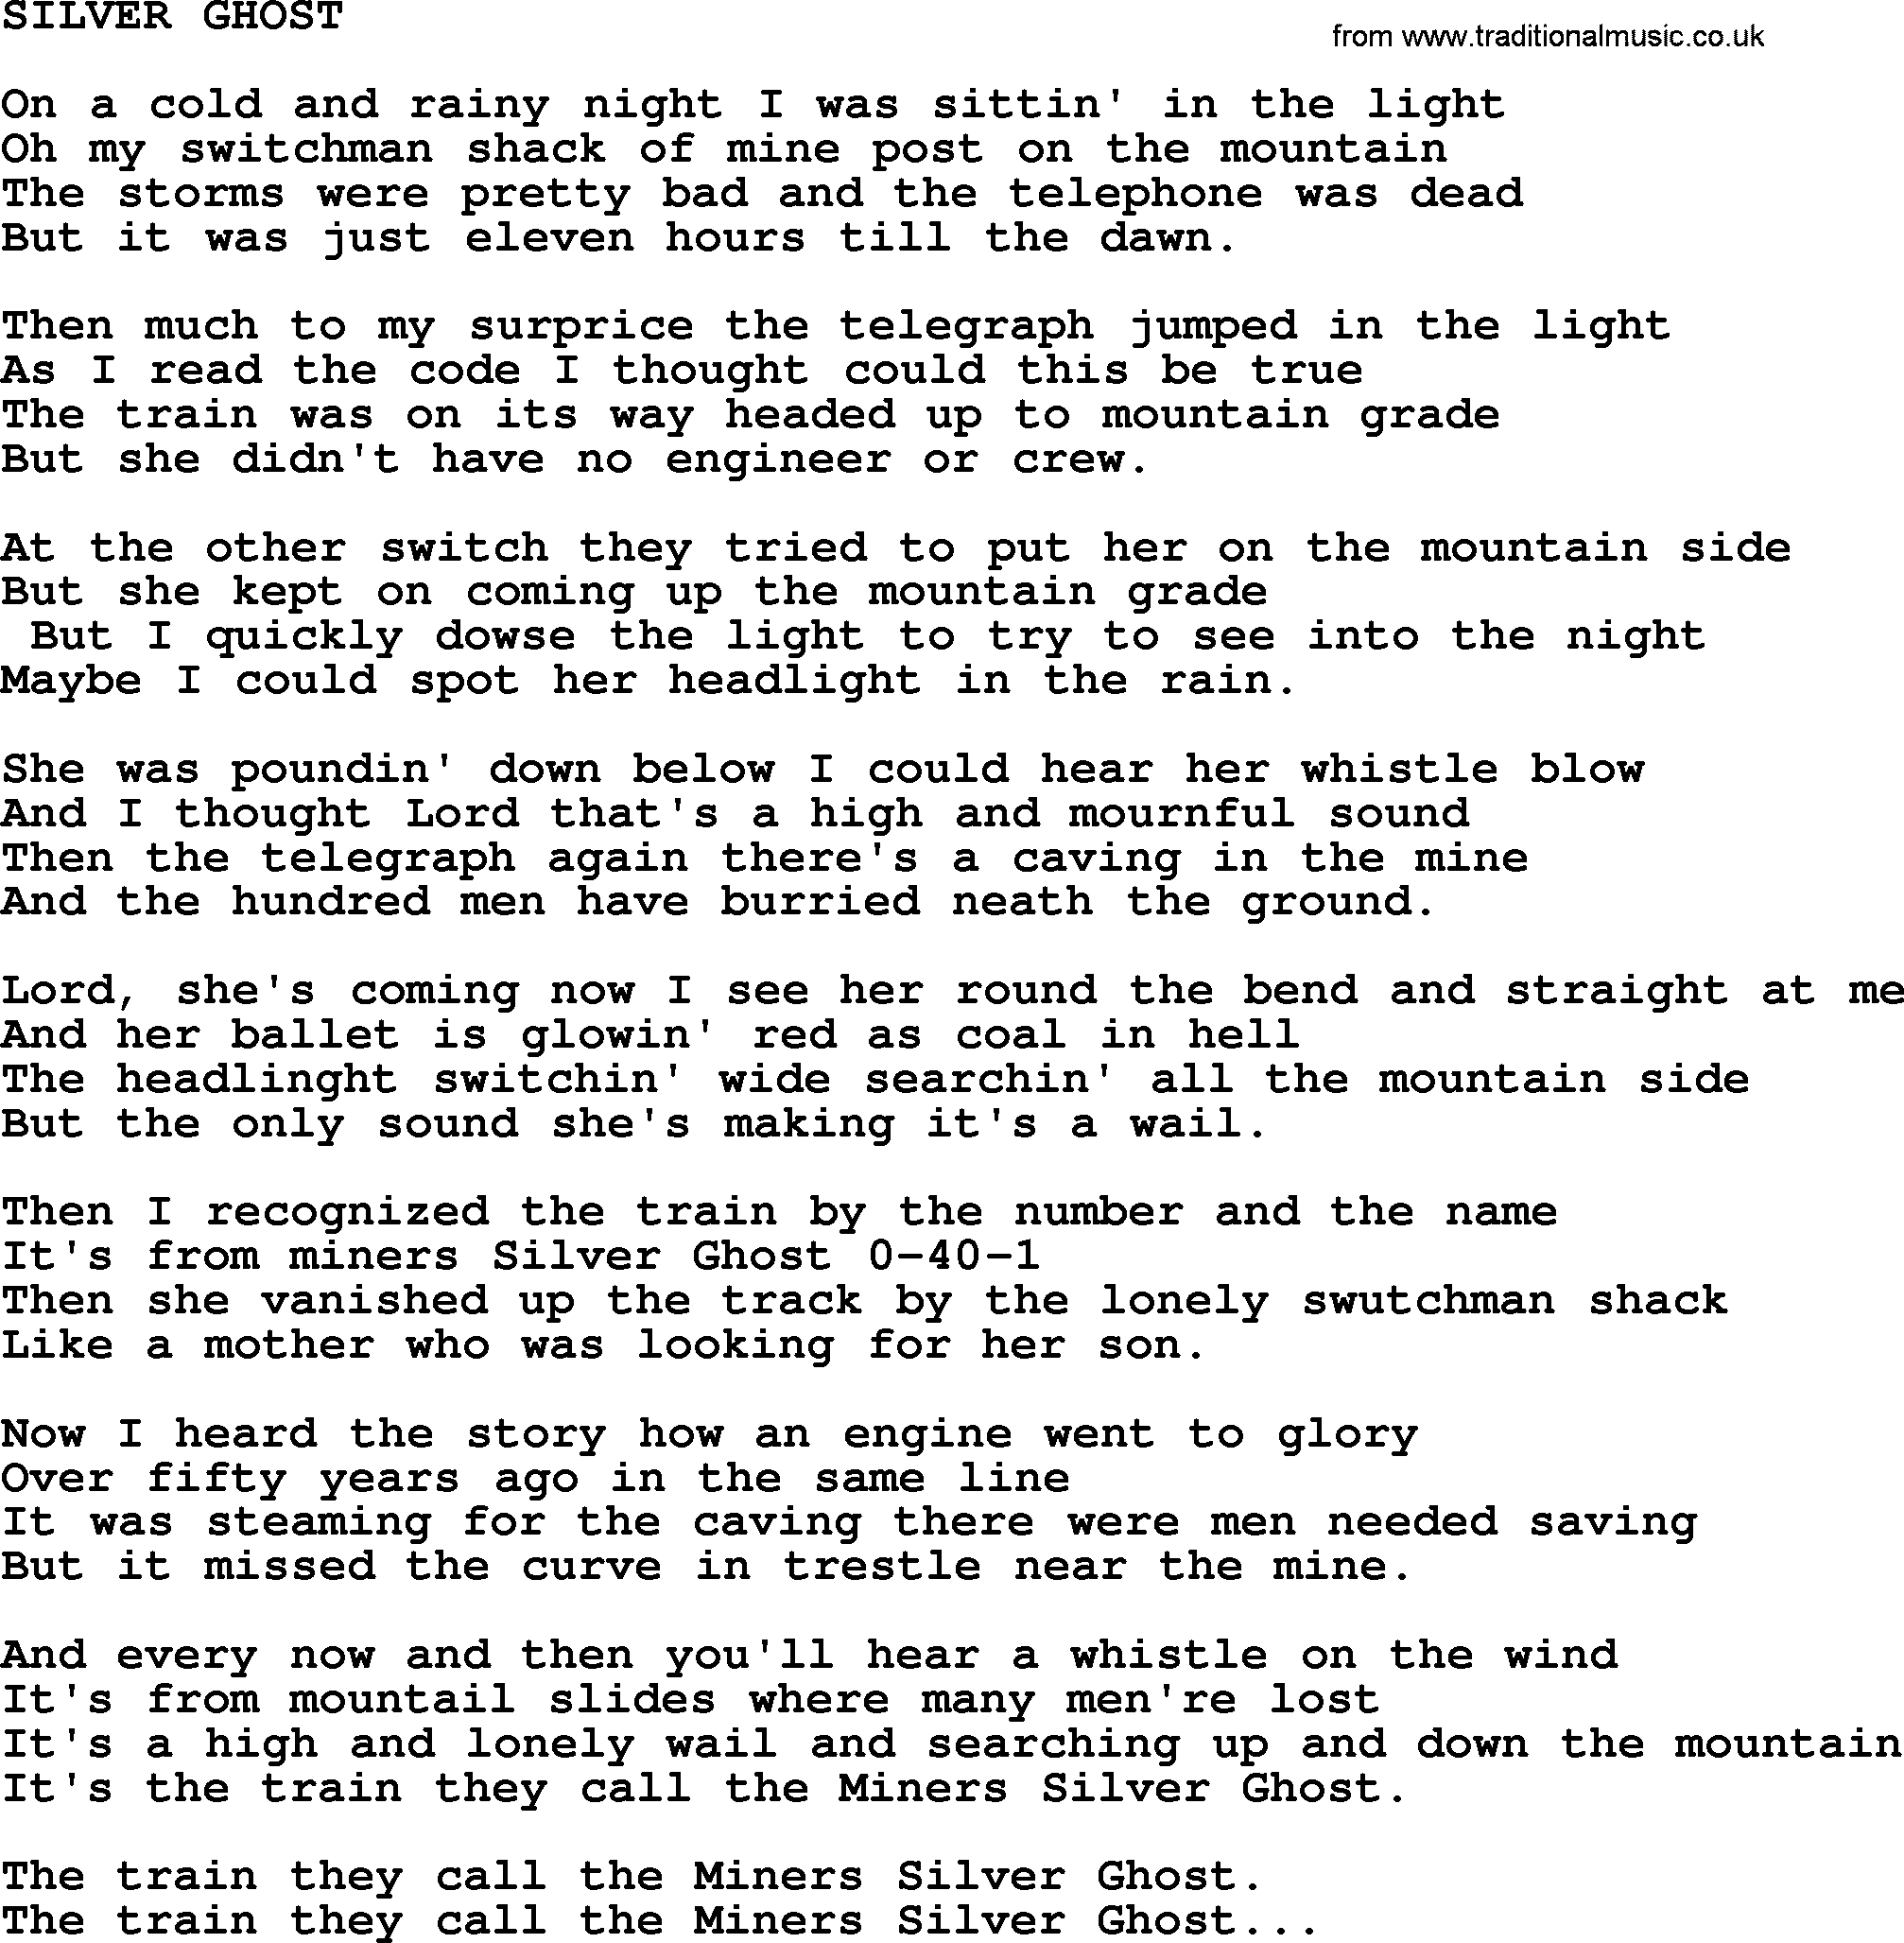 Merle Haggard song: Silver Ghost, lyrics.